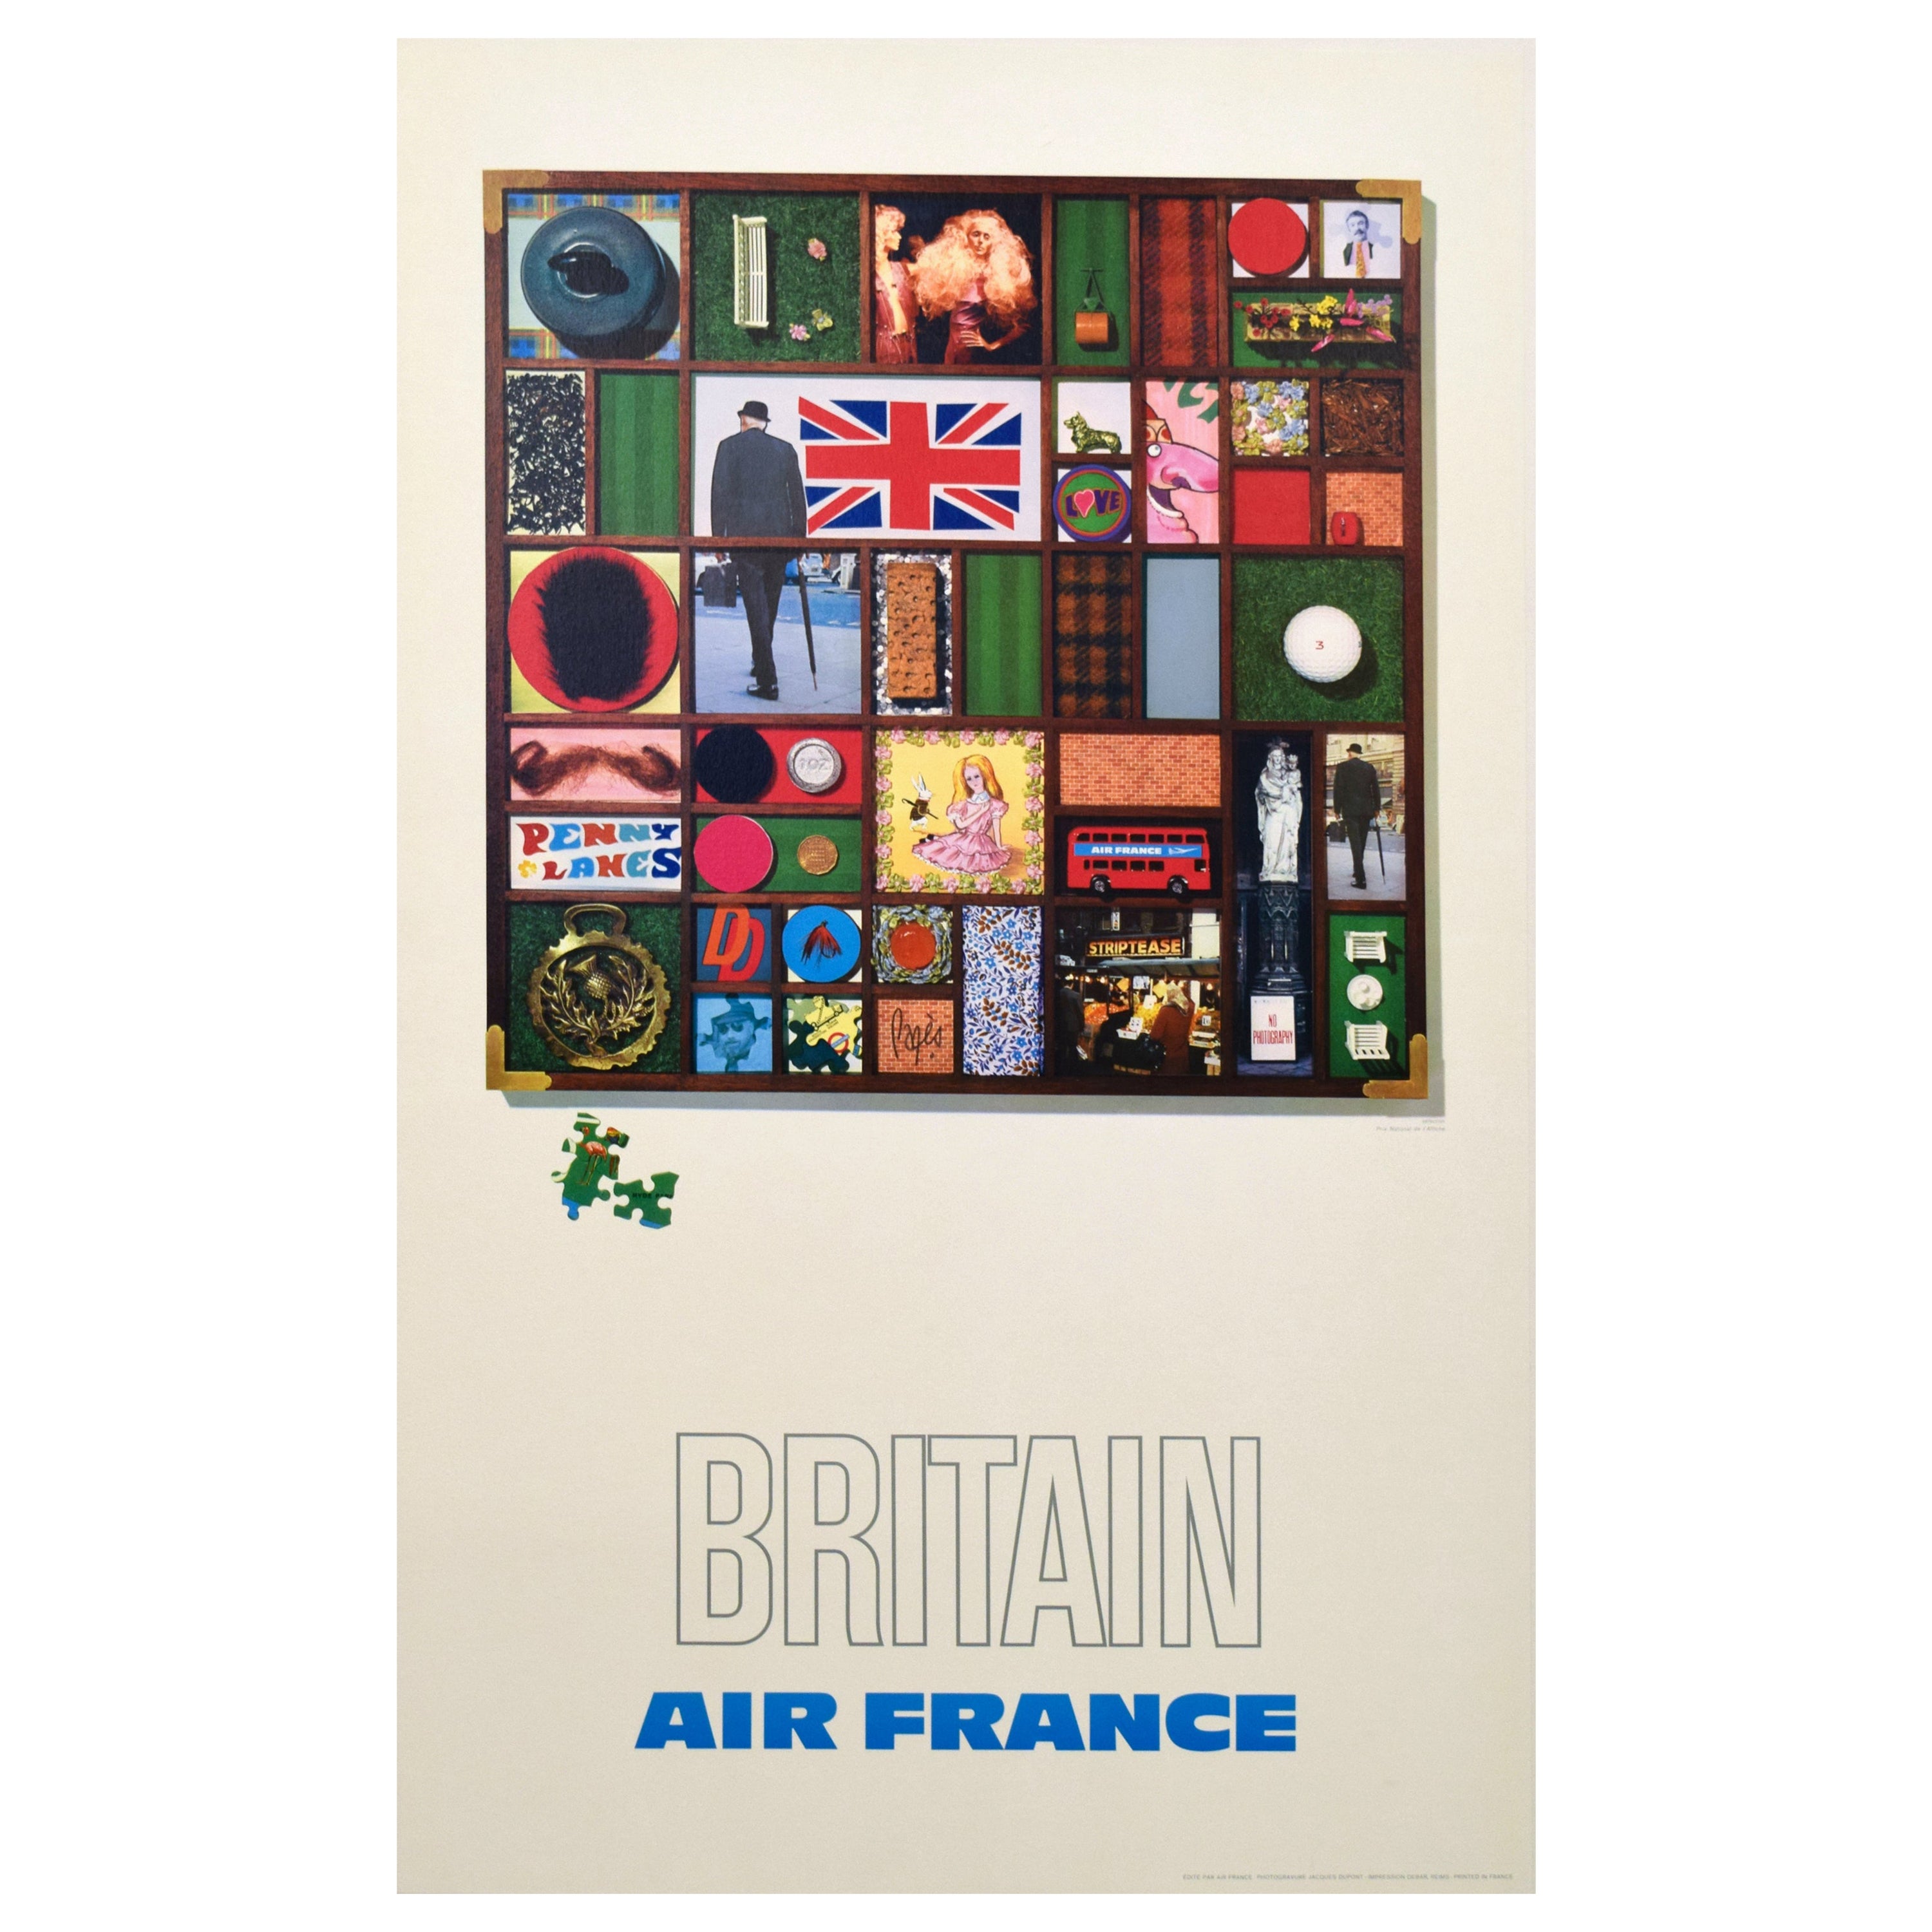 Air France Großbritannien Poster von Raymond Pagés 